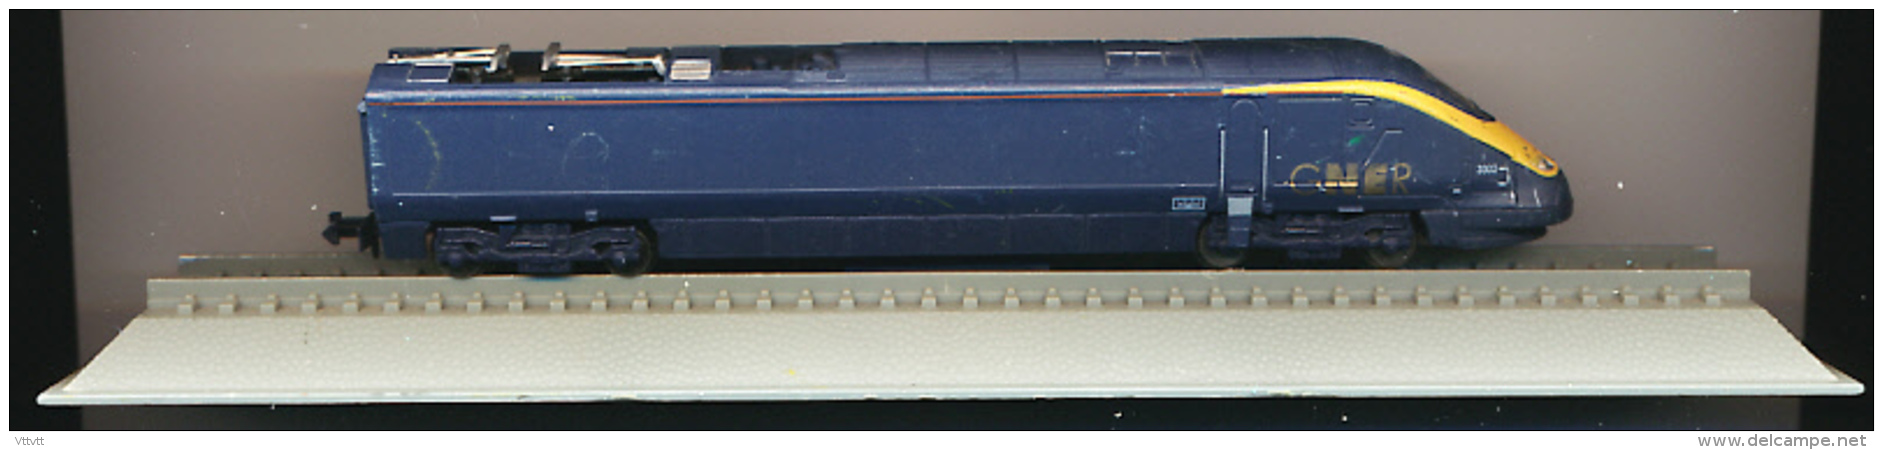 Locomotive : GNER Class 373 "White Rose", Echelle N 1/160, G = 9 Mm, United Kingdom, Grande-Bretagne - Locomotoras